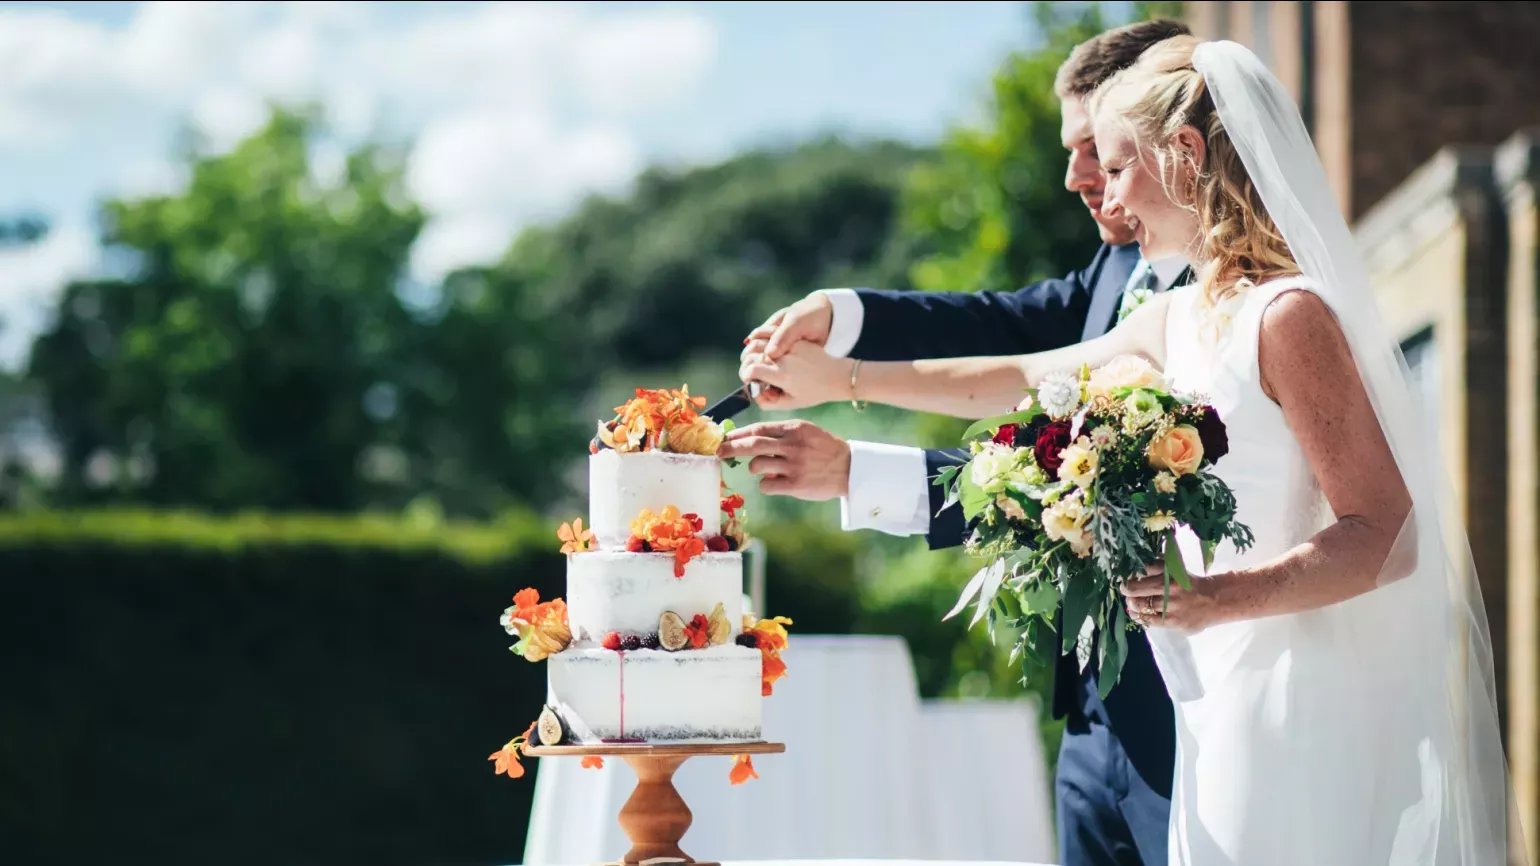 A couple cut into a wedding cake outside